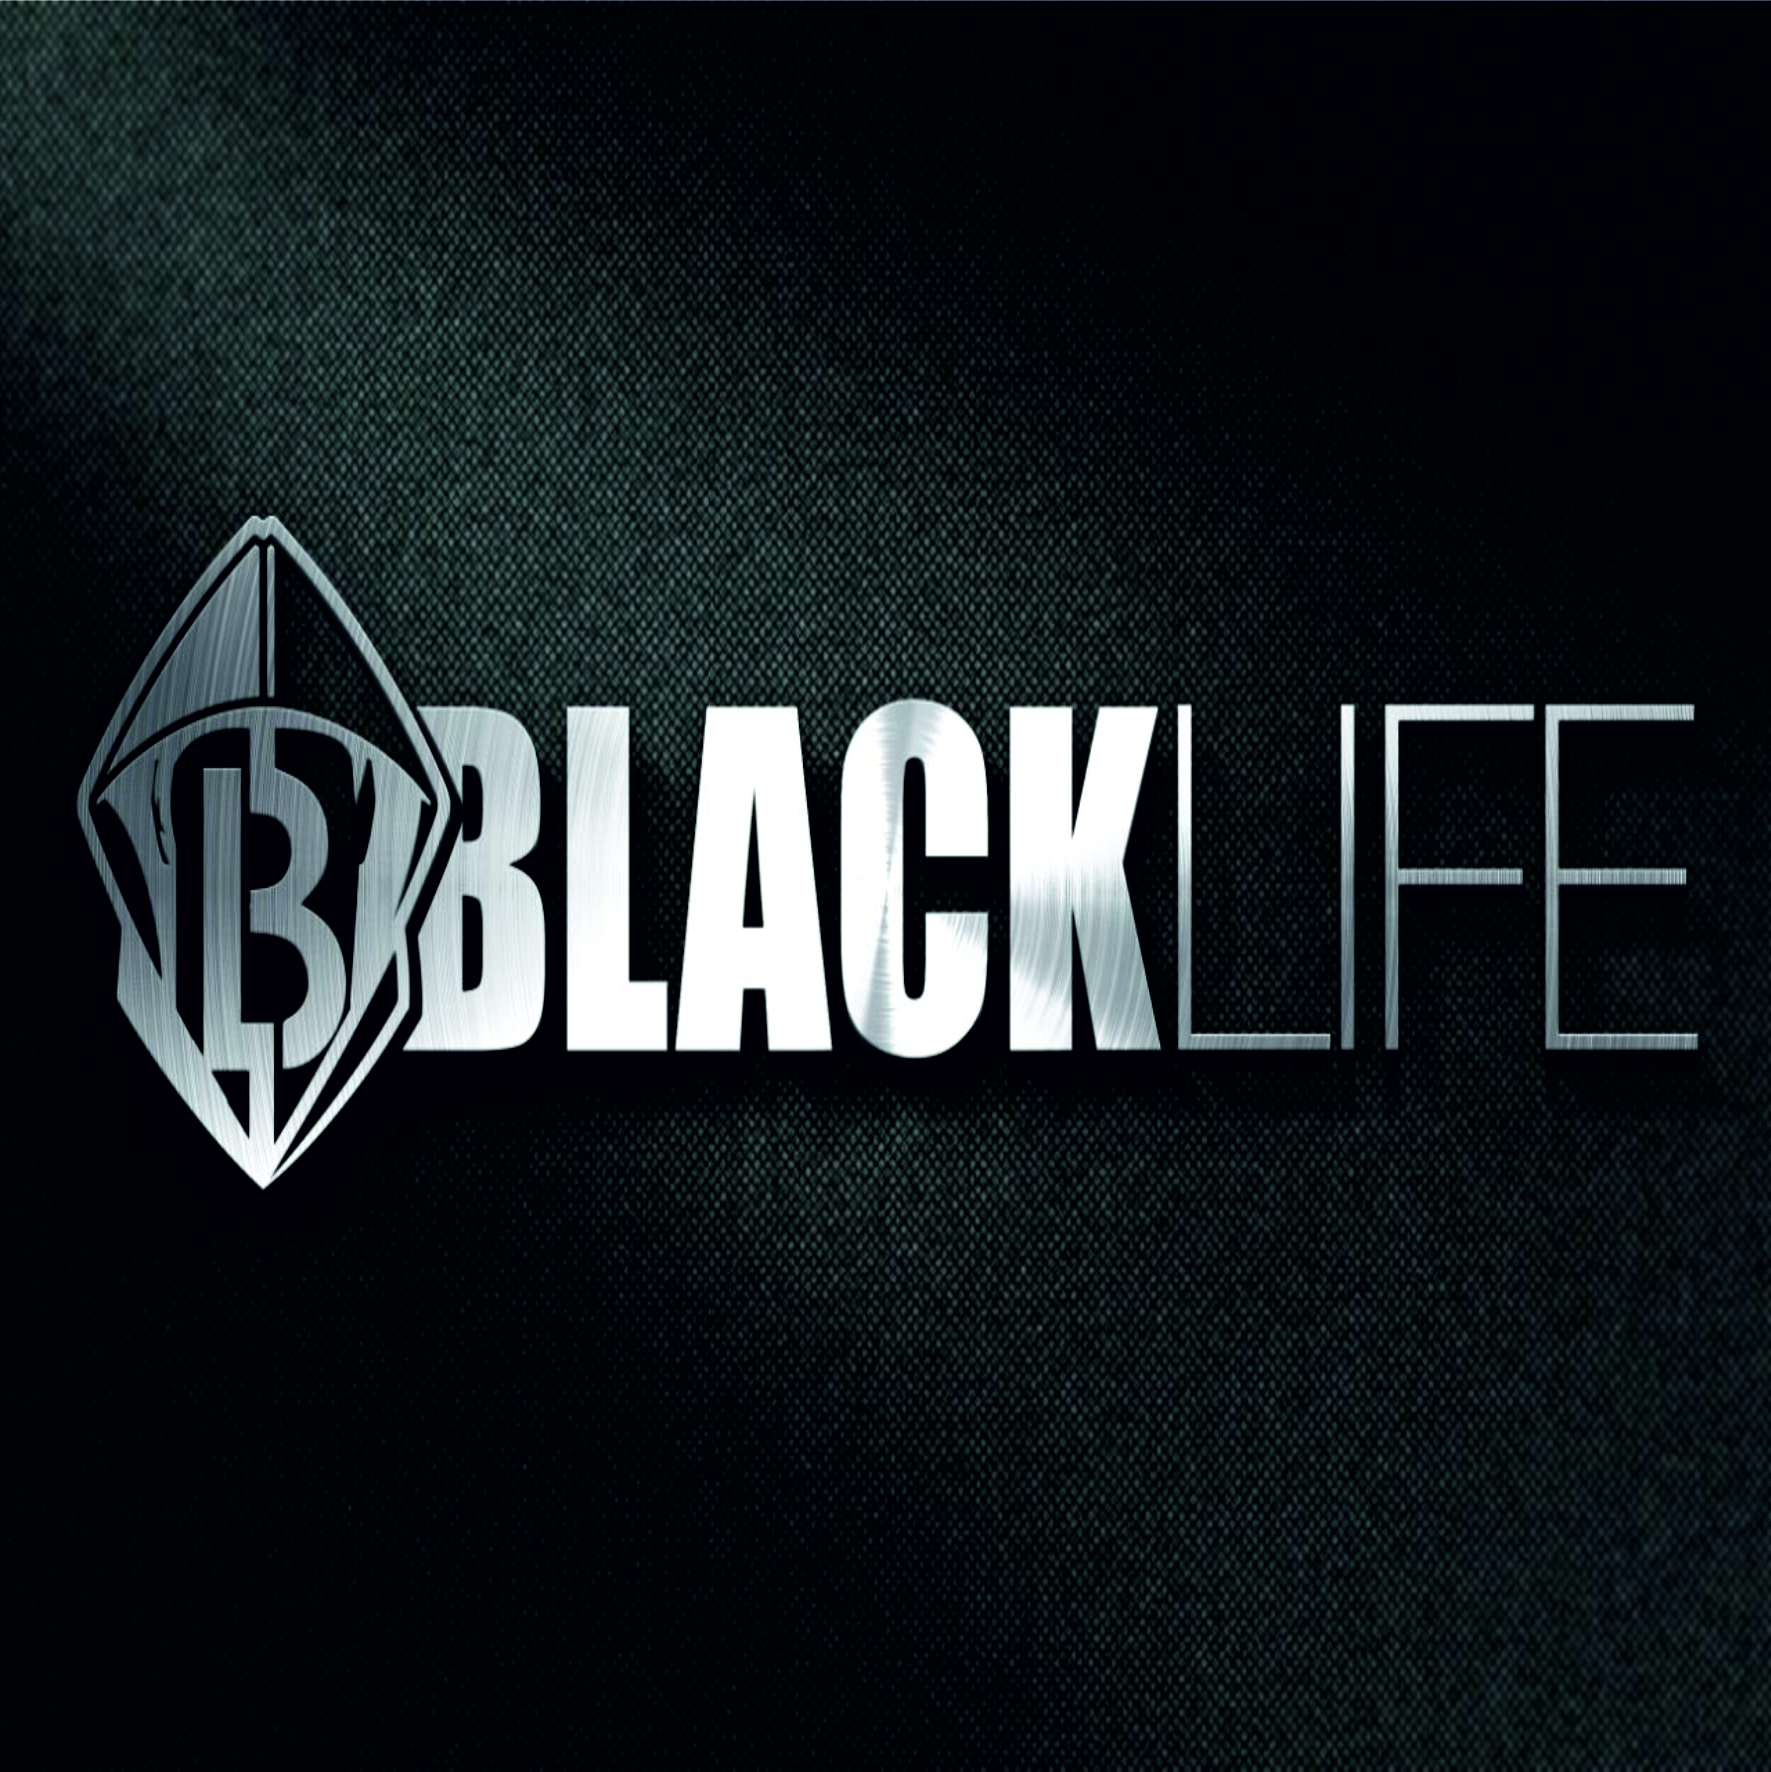 BlackLife